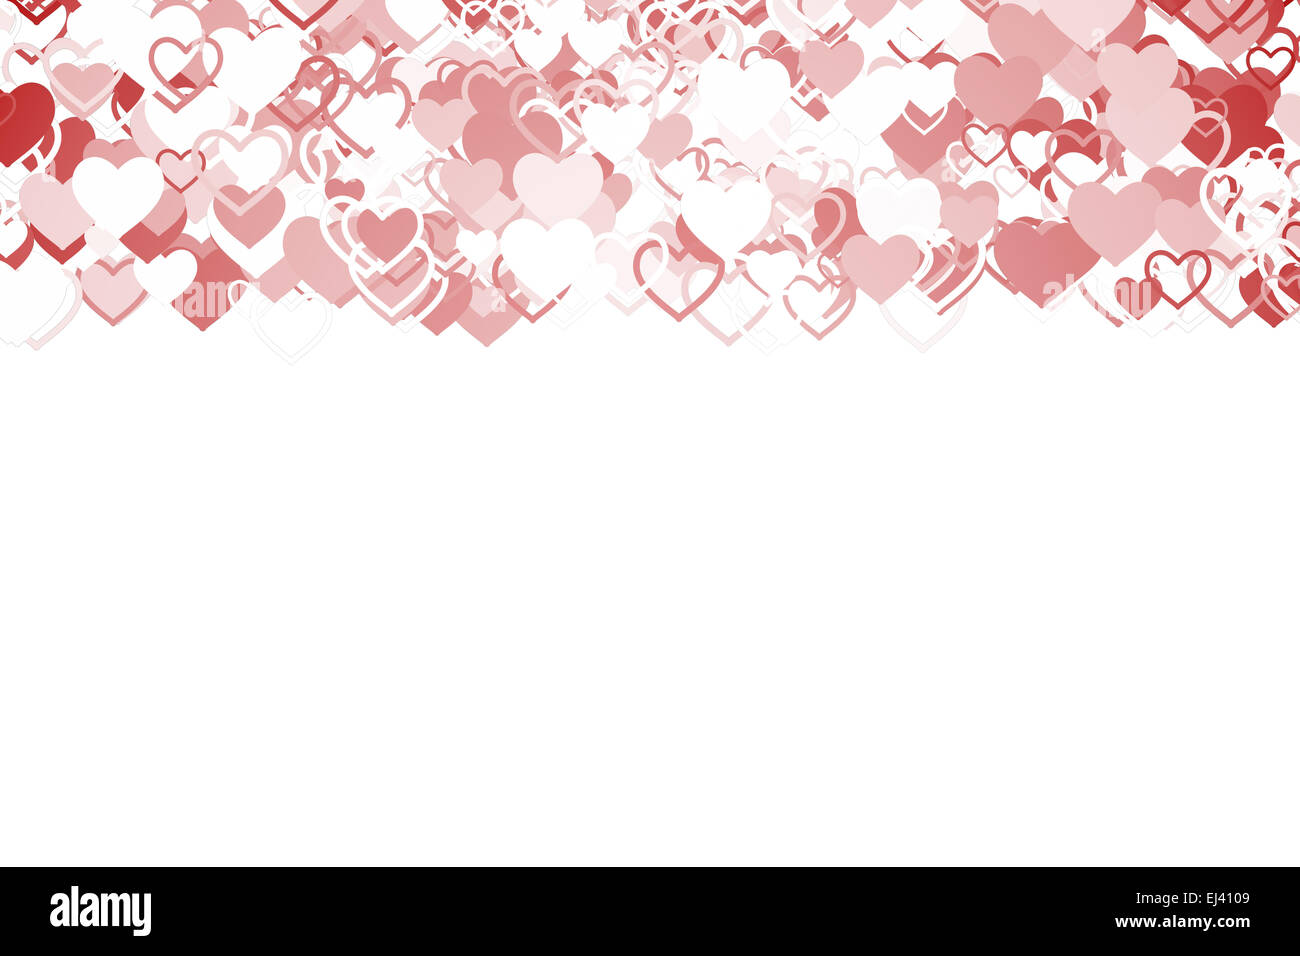 Valentines heart design Stock Photo